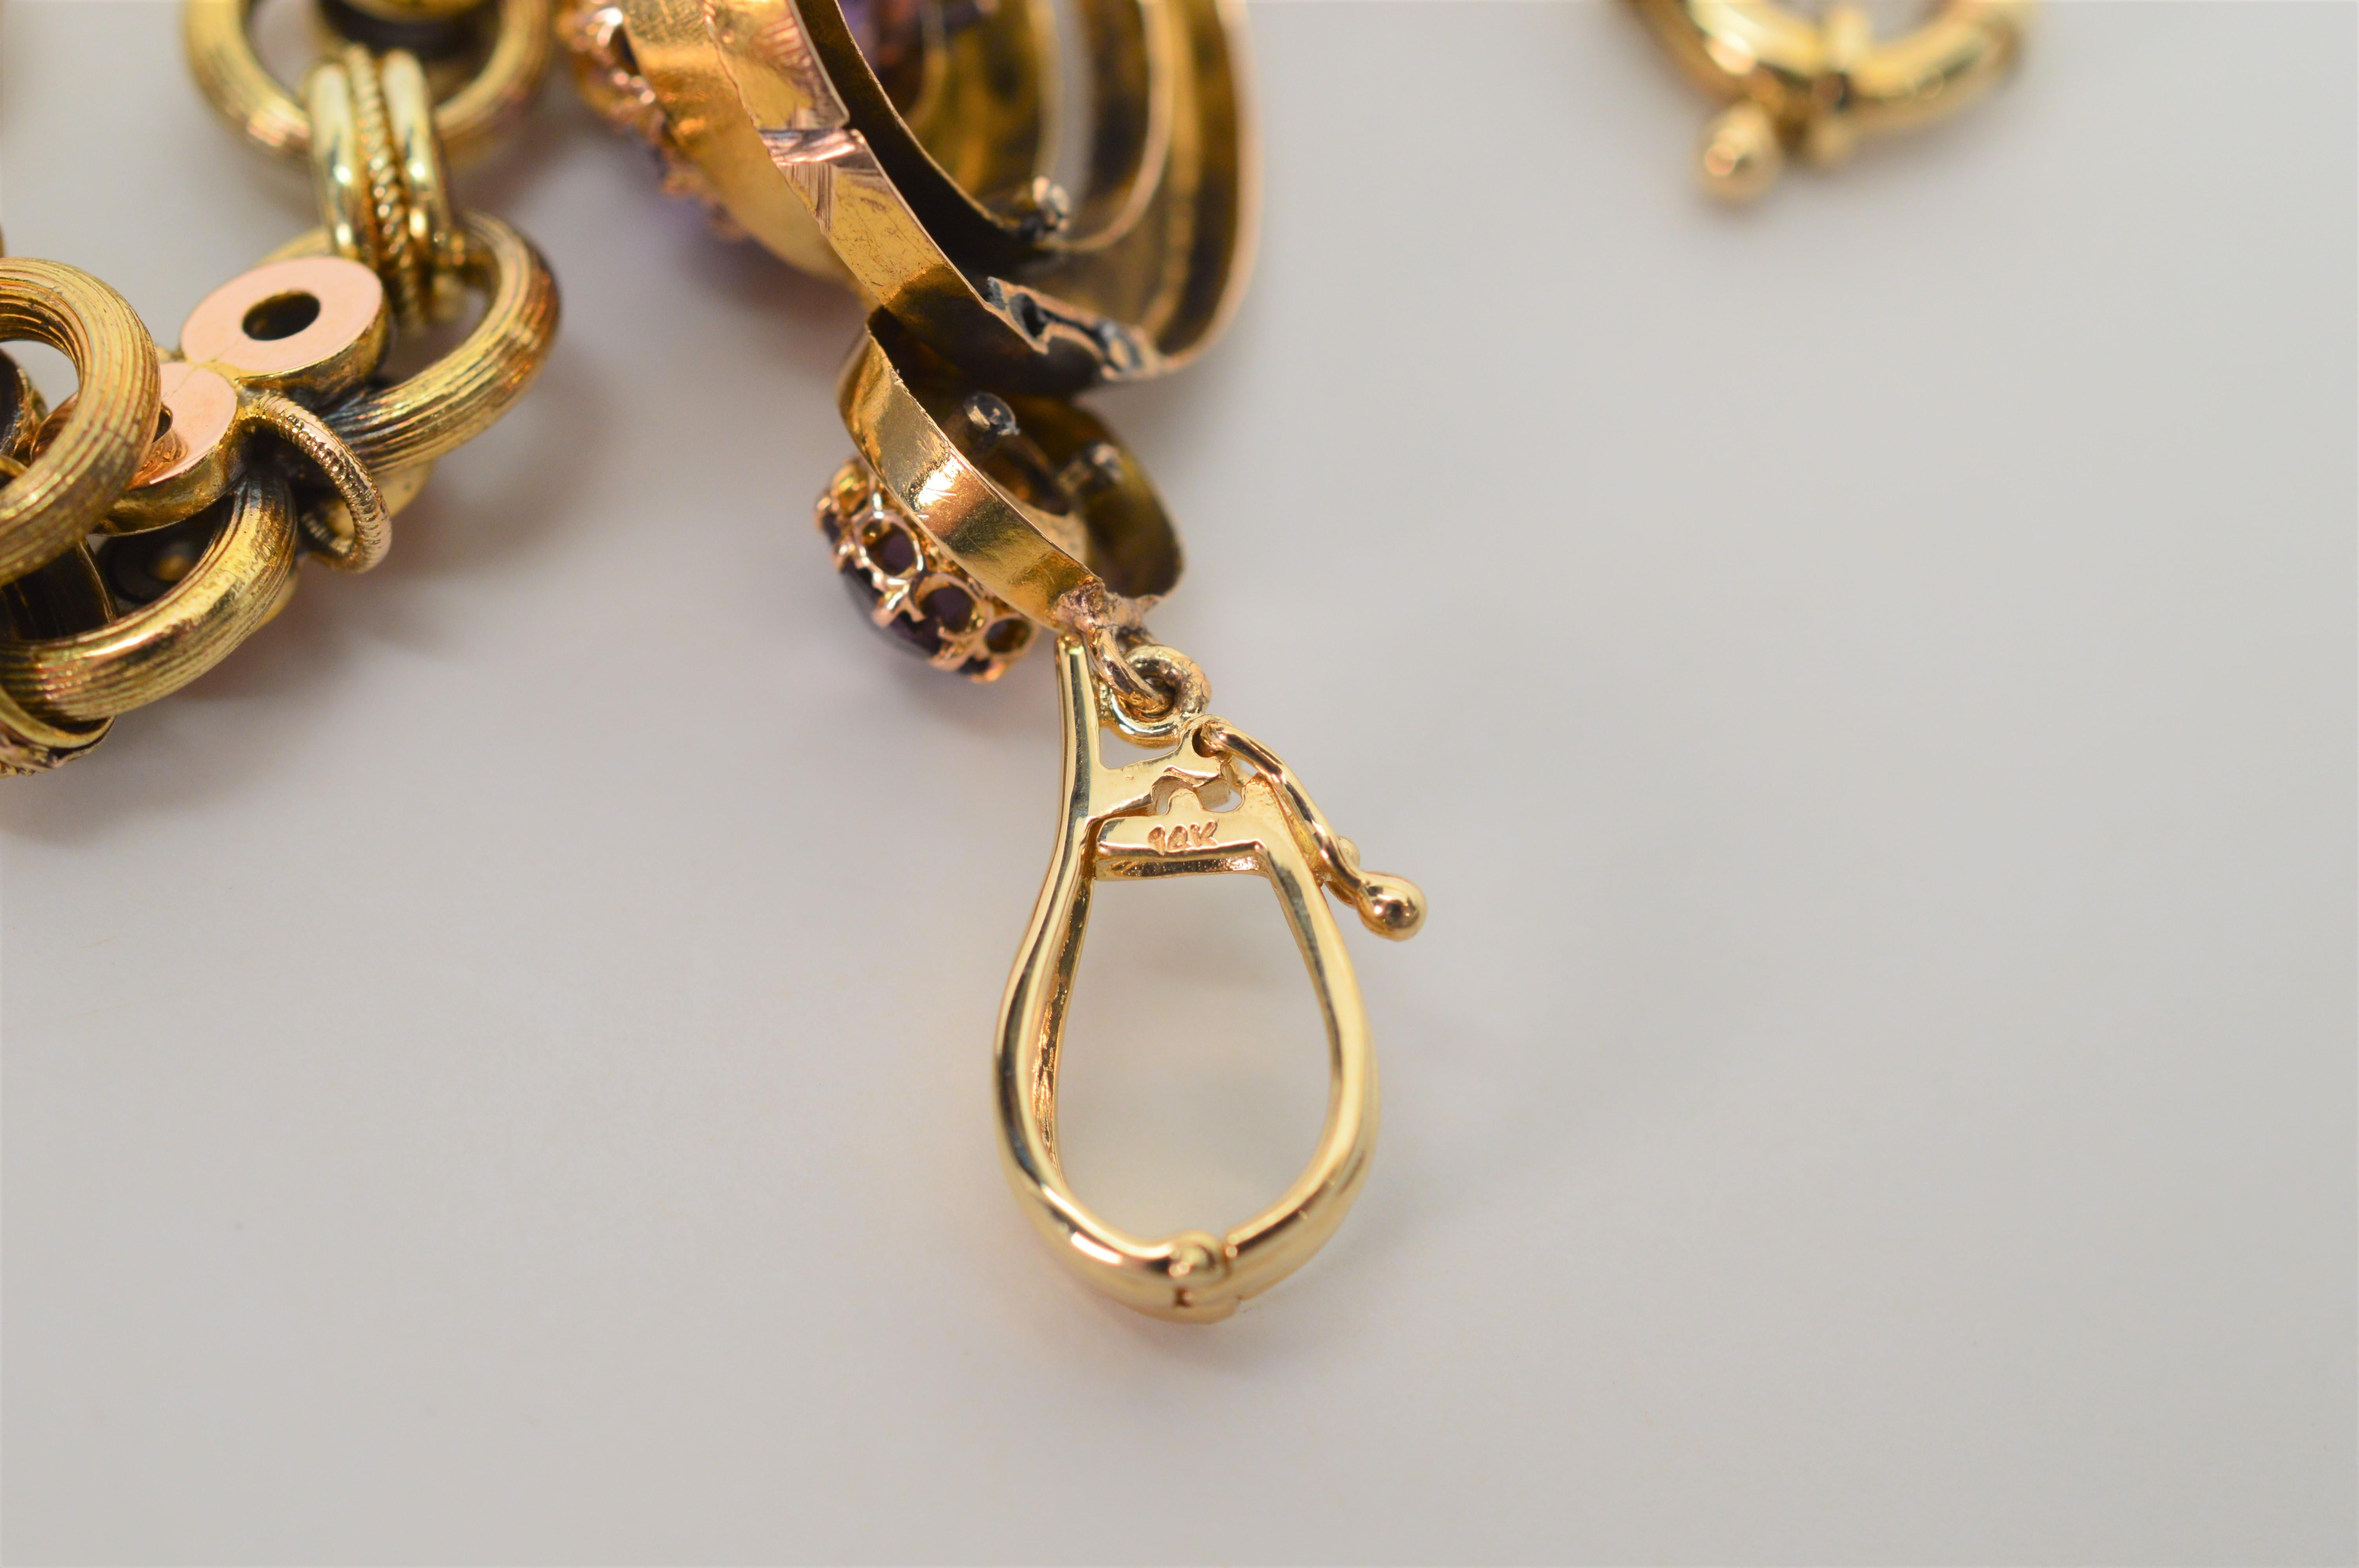 Women's Antique Gold Necklace with Amethyst Pendant Enhancer For Sale